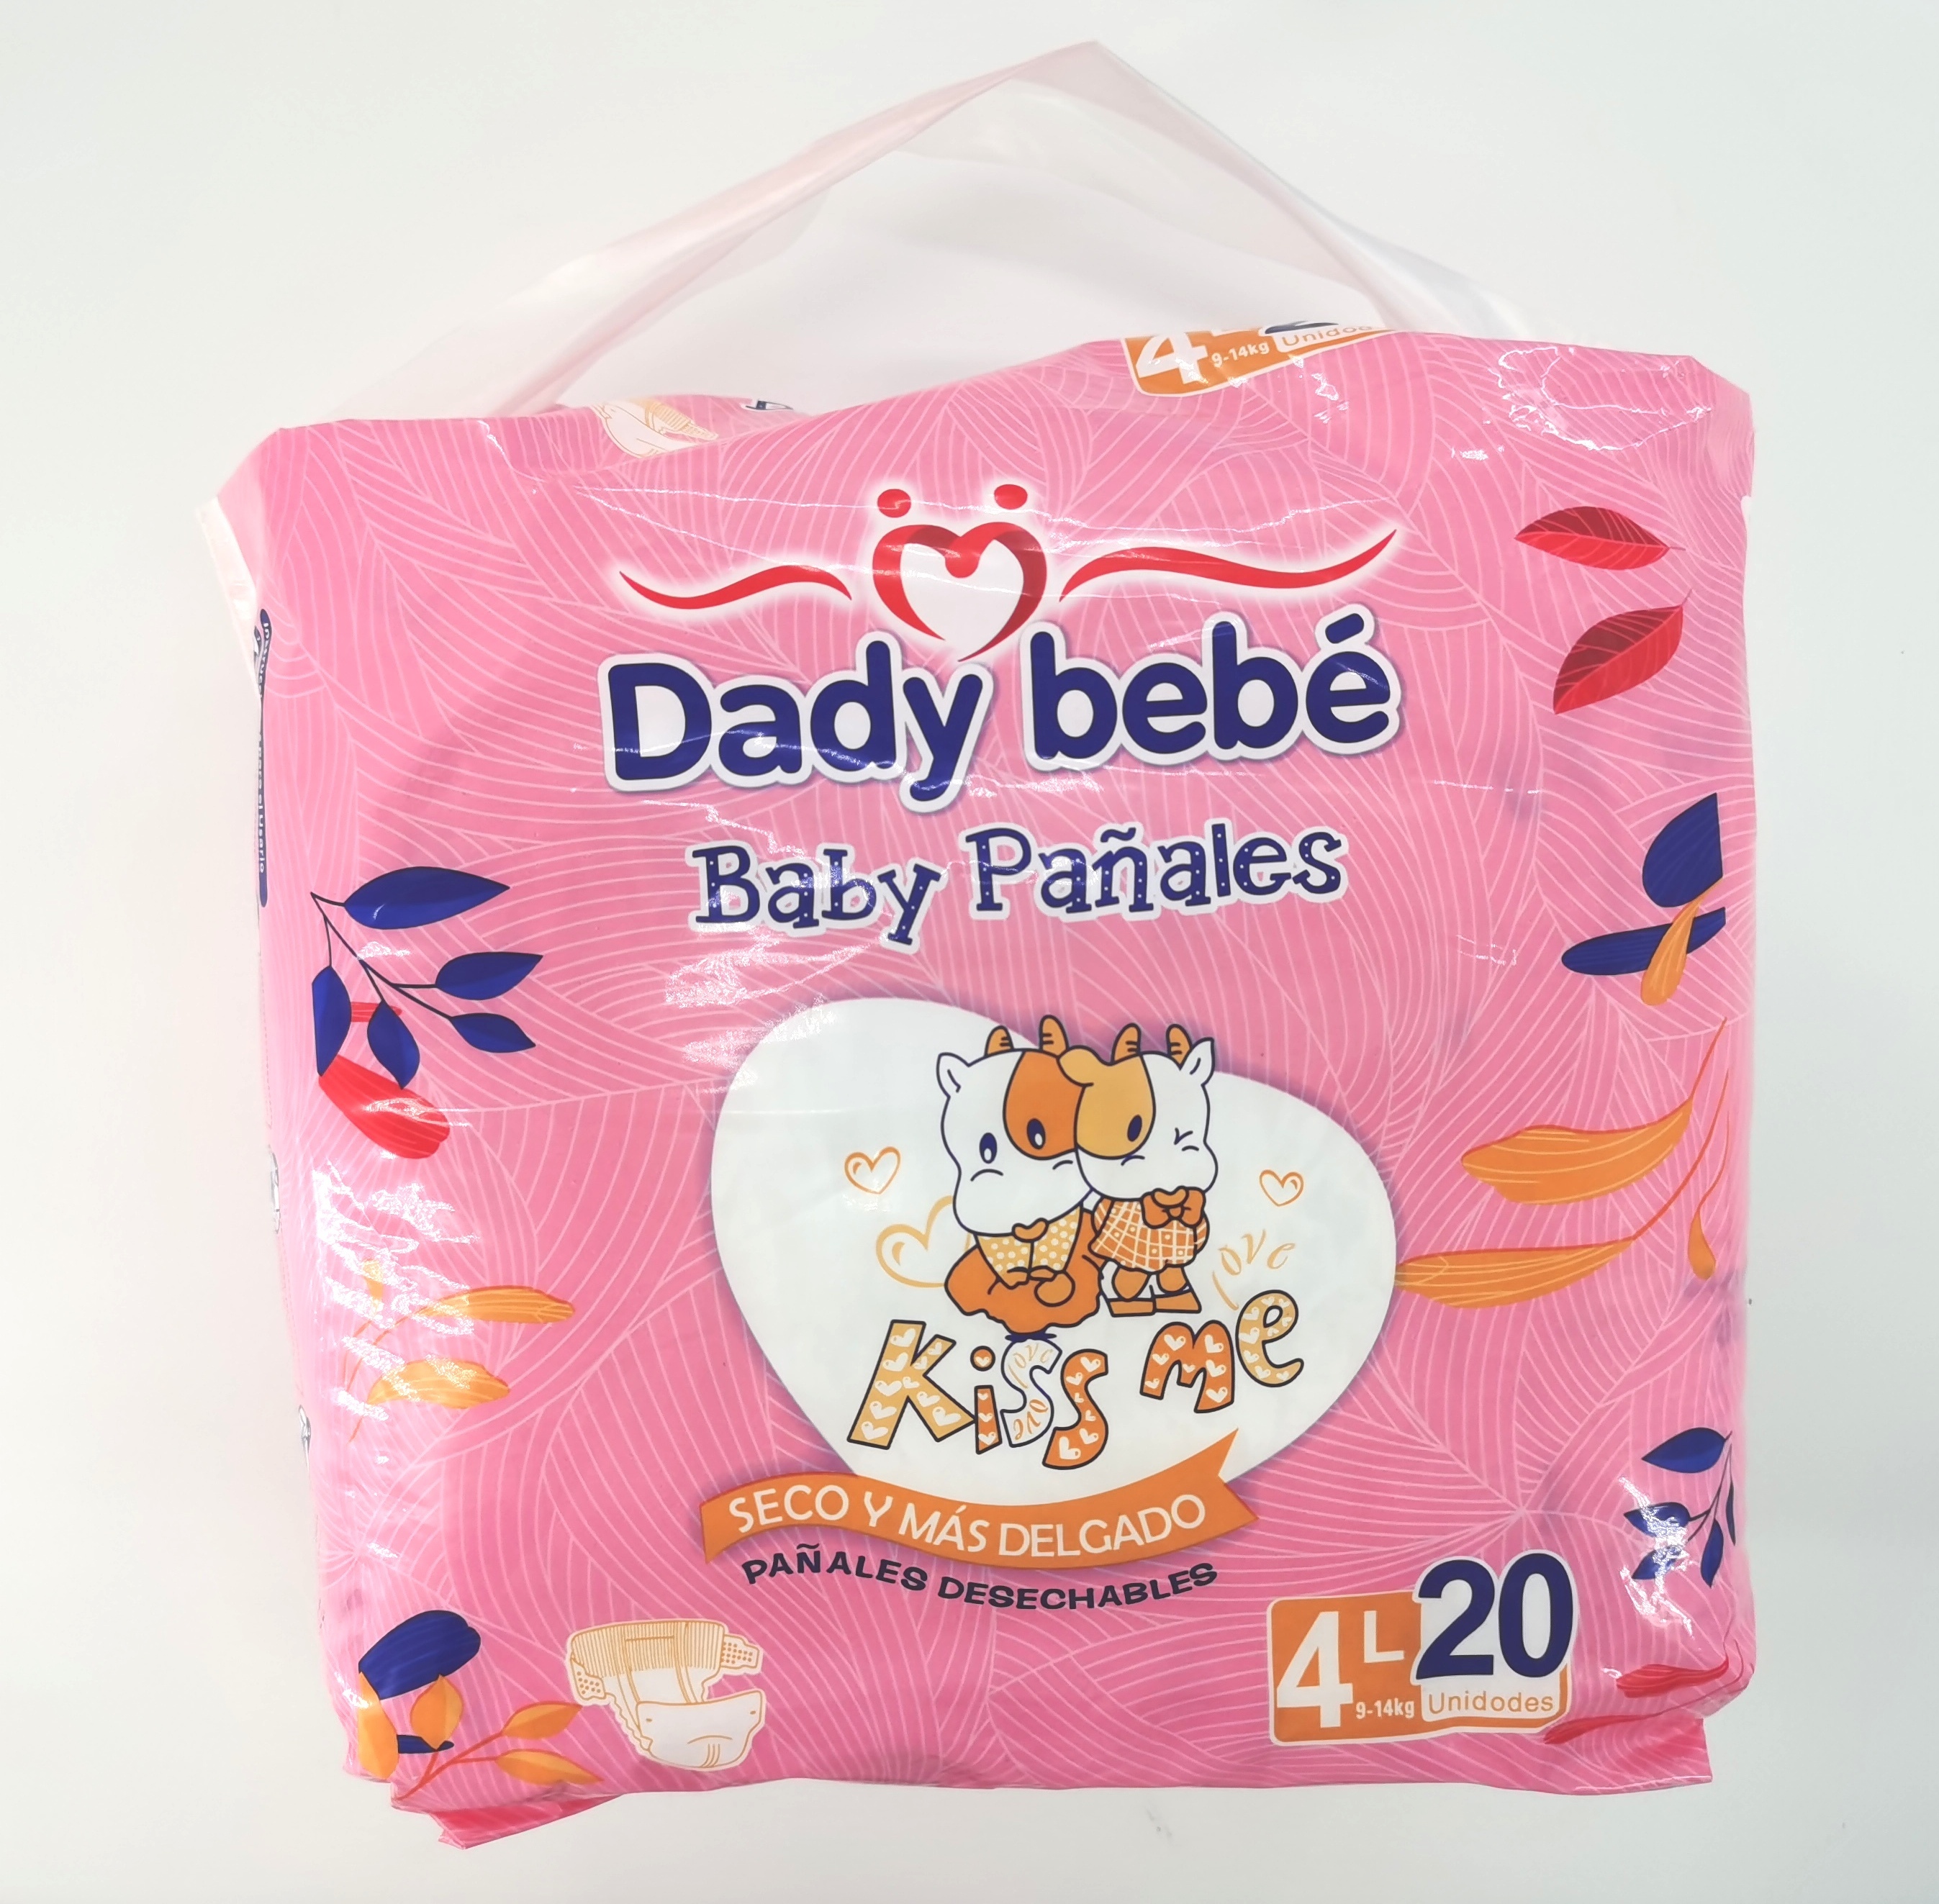 China Manufacturer for Eq Diaper - Baby diapers Japan santi Baby nappies Manufacturers Nigeria Africa Vietnam Market disposable diaper pad pull up pants panties – Ensha